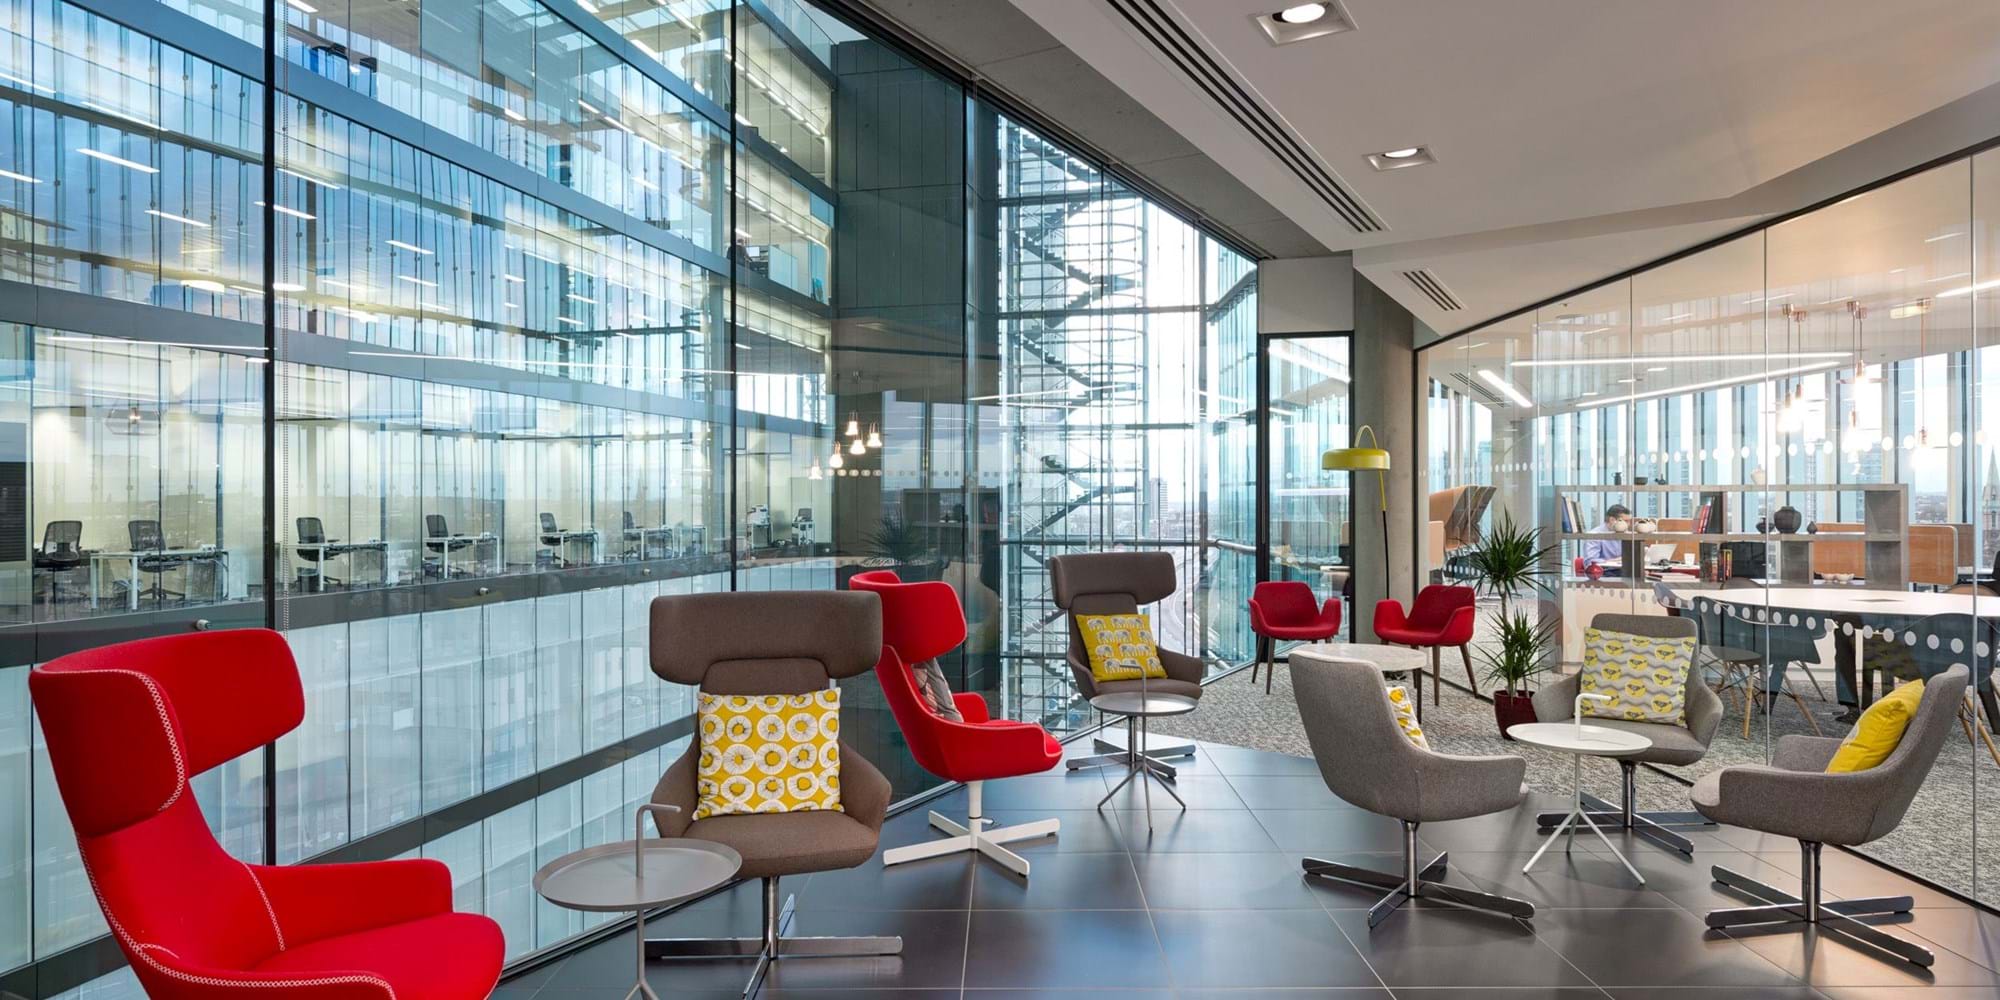 Modus Workspace office design, fit out and refurbishment - Regus Paddington - Reception - Regus paddington 02 highres sRGB.jpg